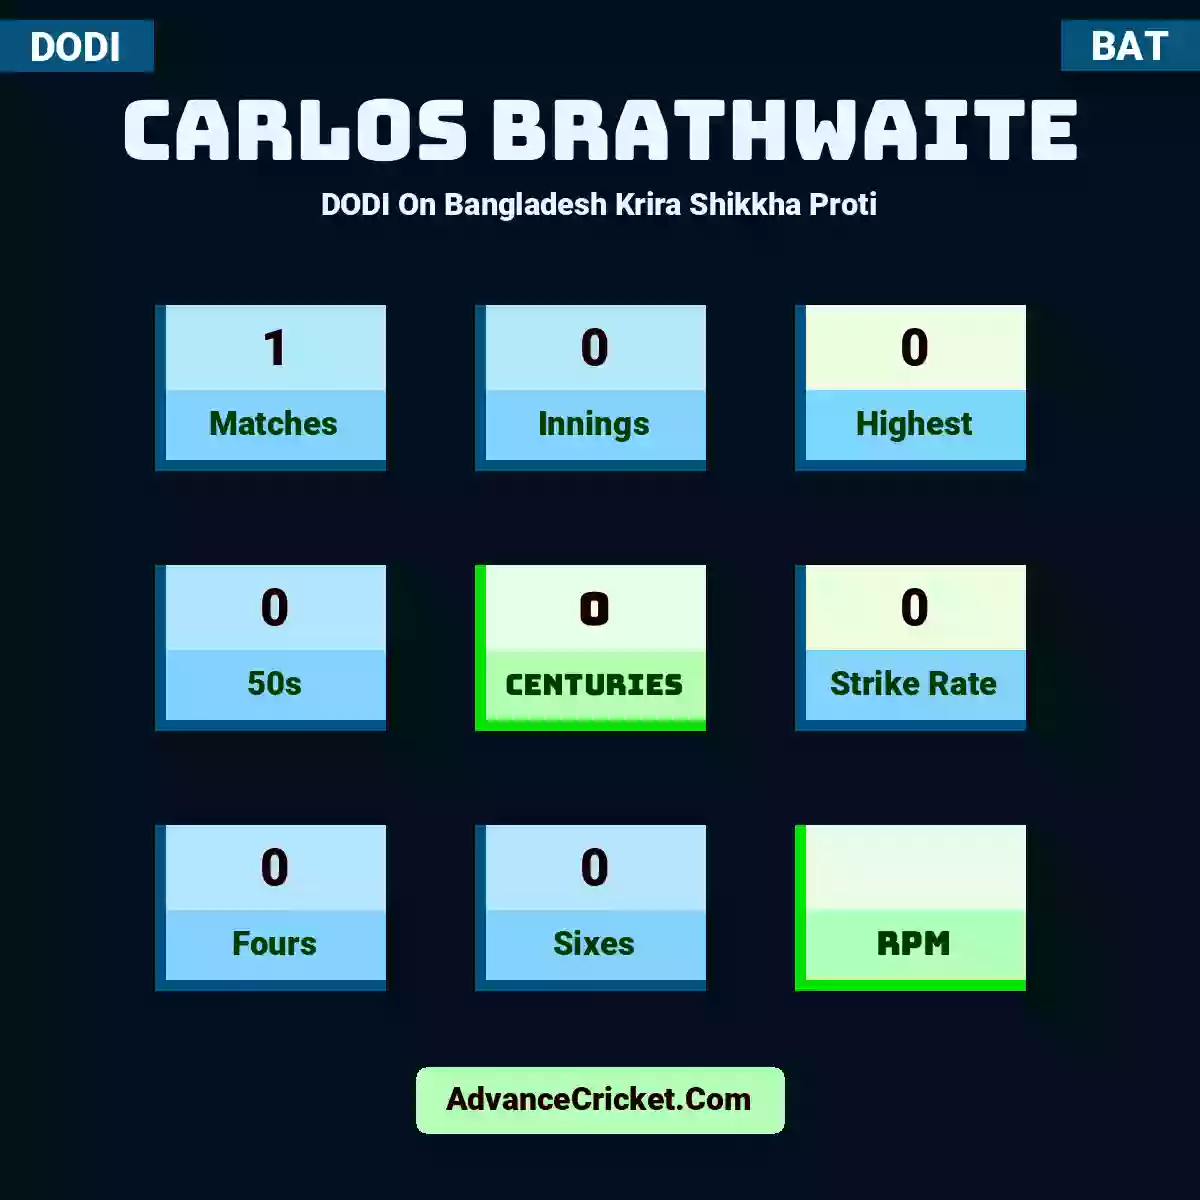 Carlos Brathwaite DODI  On Bangladesh Krira Shikkha Proti, Carlos Brathwaite played 1 matches, scored 0 runs as highest, 0 half-centuries, and 0 centuries, with a strike rate of 0. C.Brathwaite hit 0 fours and 0 sixes.